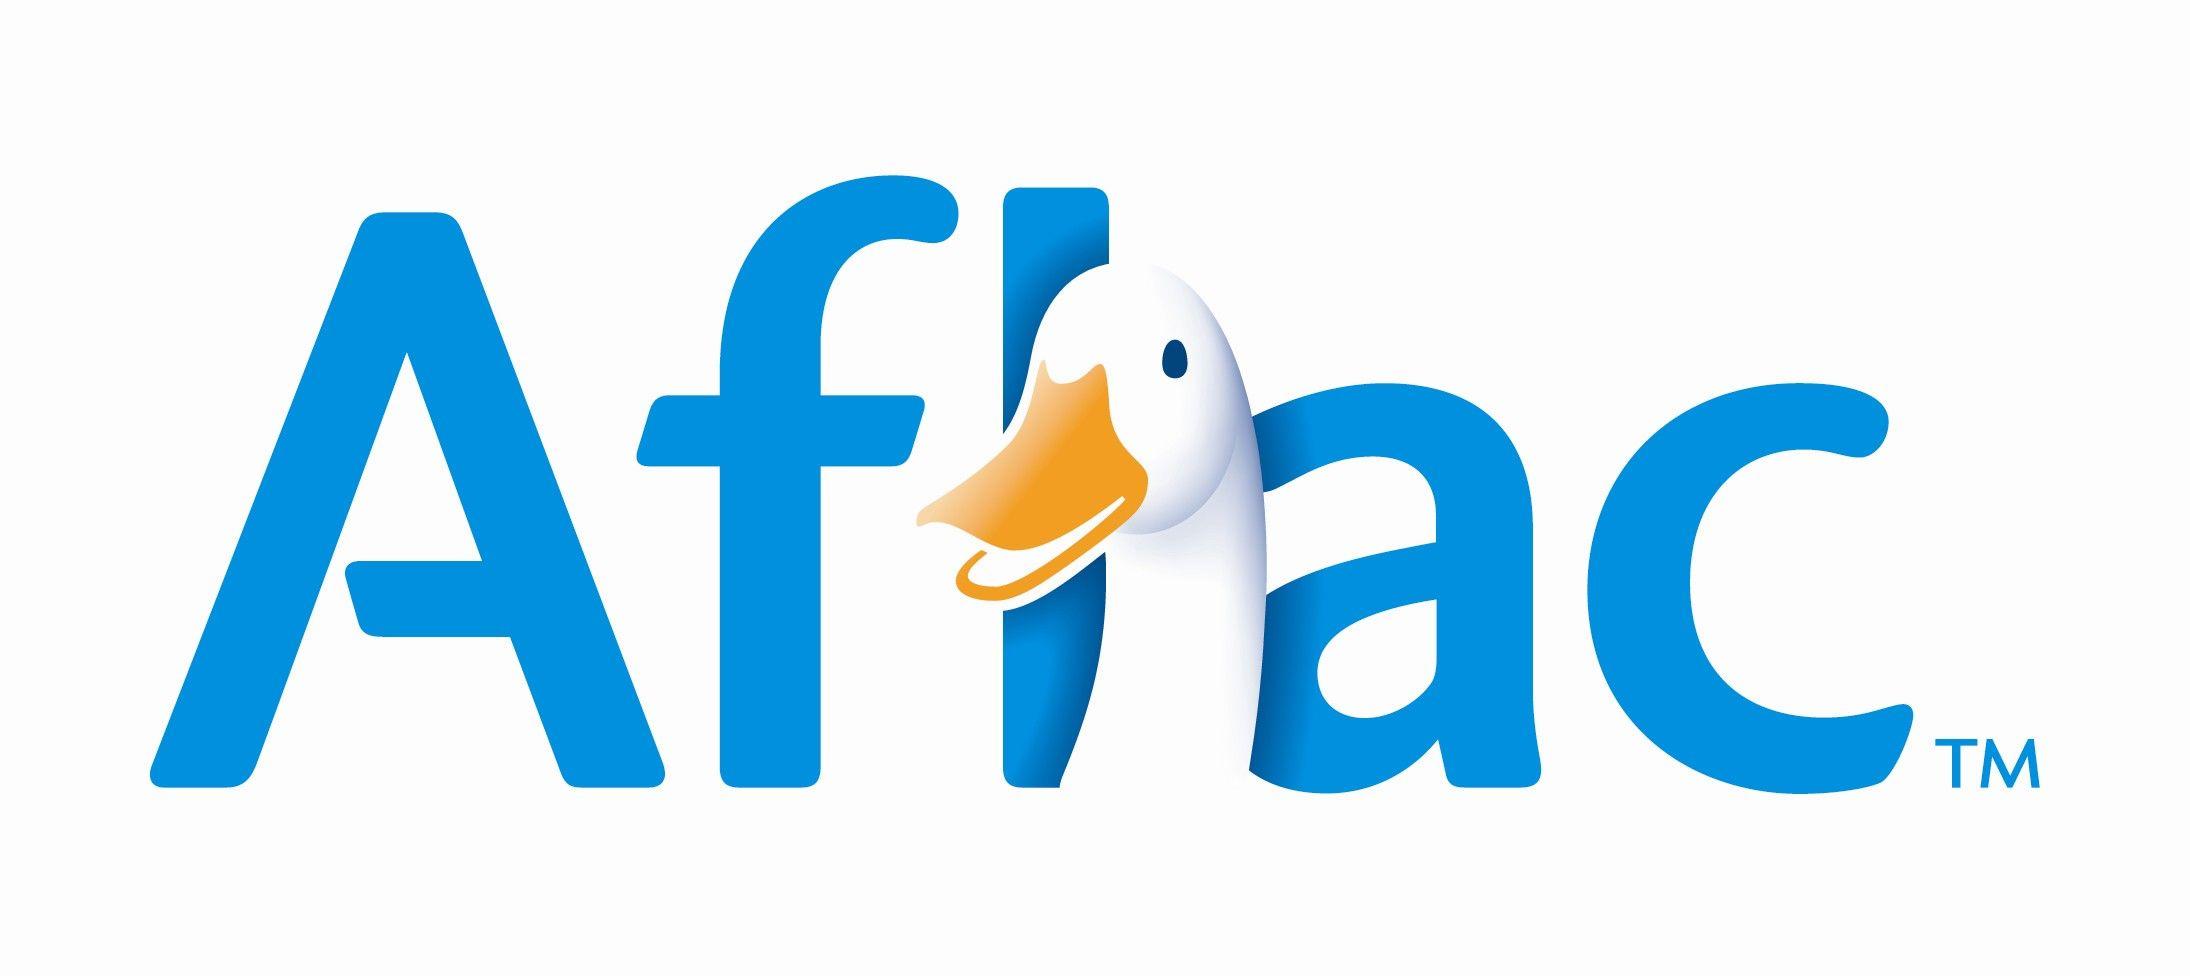 Duck Company Logo - Aflac Logos